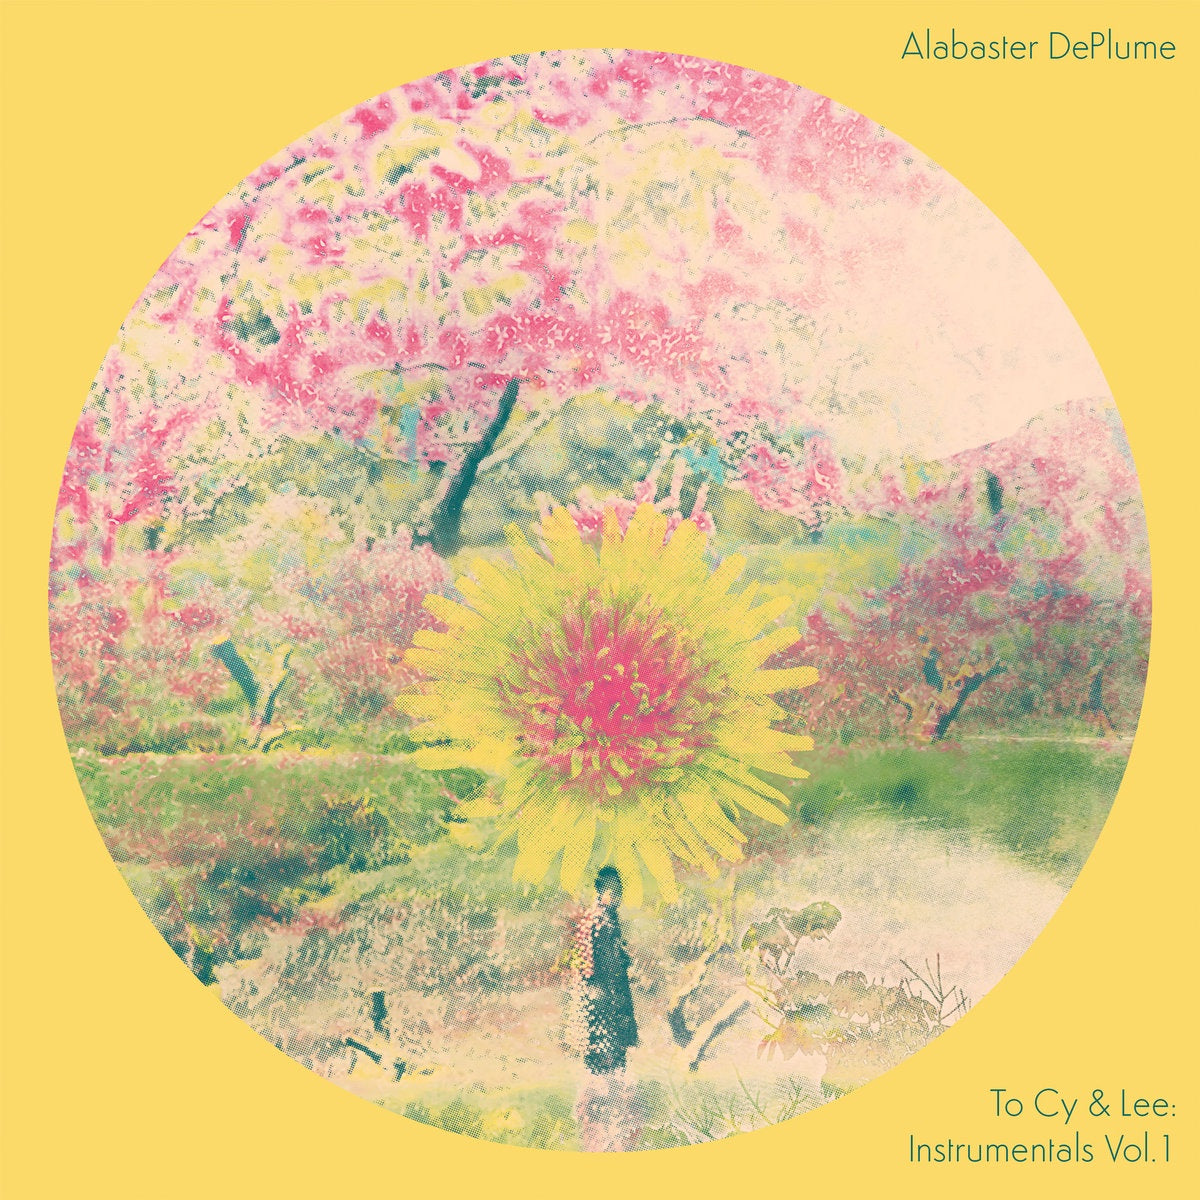 Alabaster DePlume - To Cy & Lee: Instrumentals Vol. 1- New LP Record 2020 International Anthem USA Vinyl - Free Jazz / Avant Garde